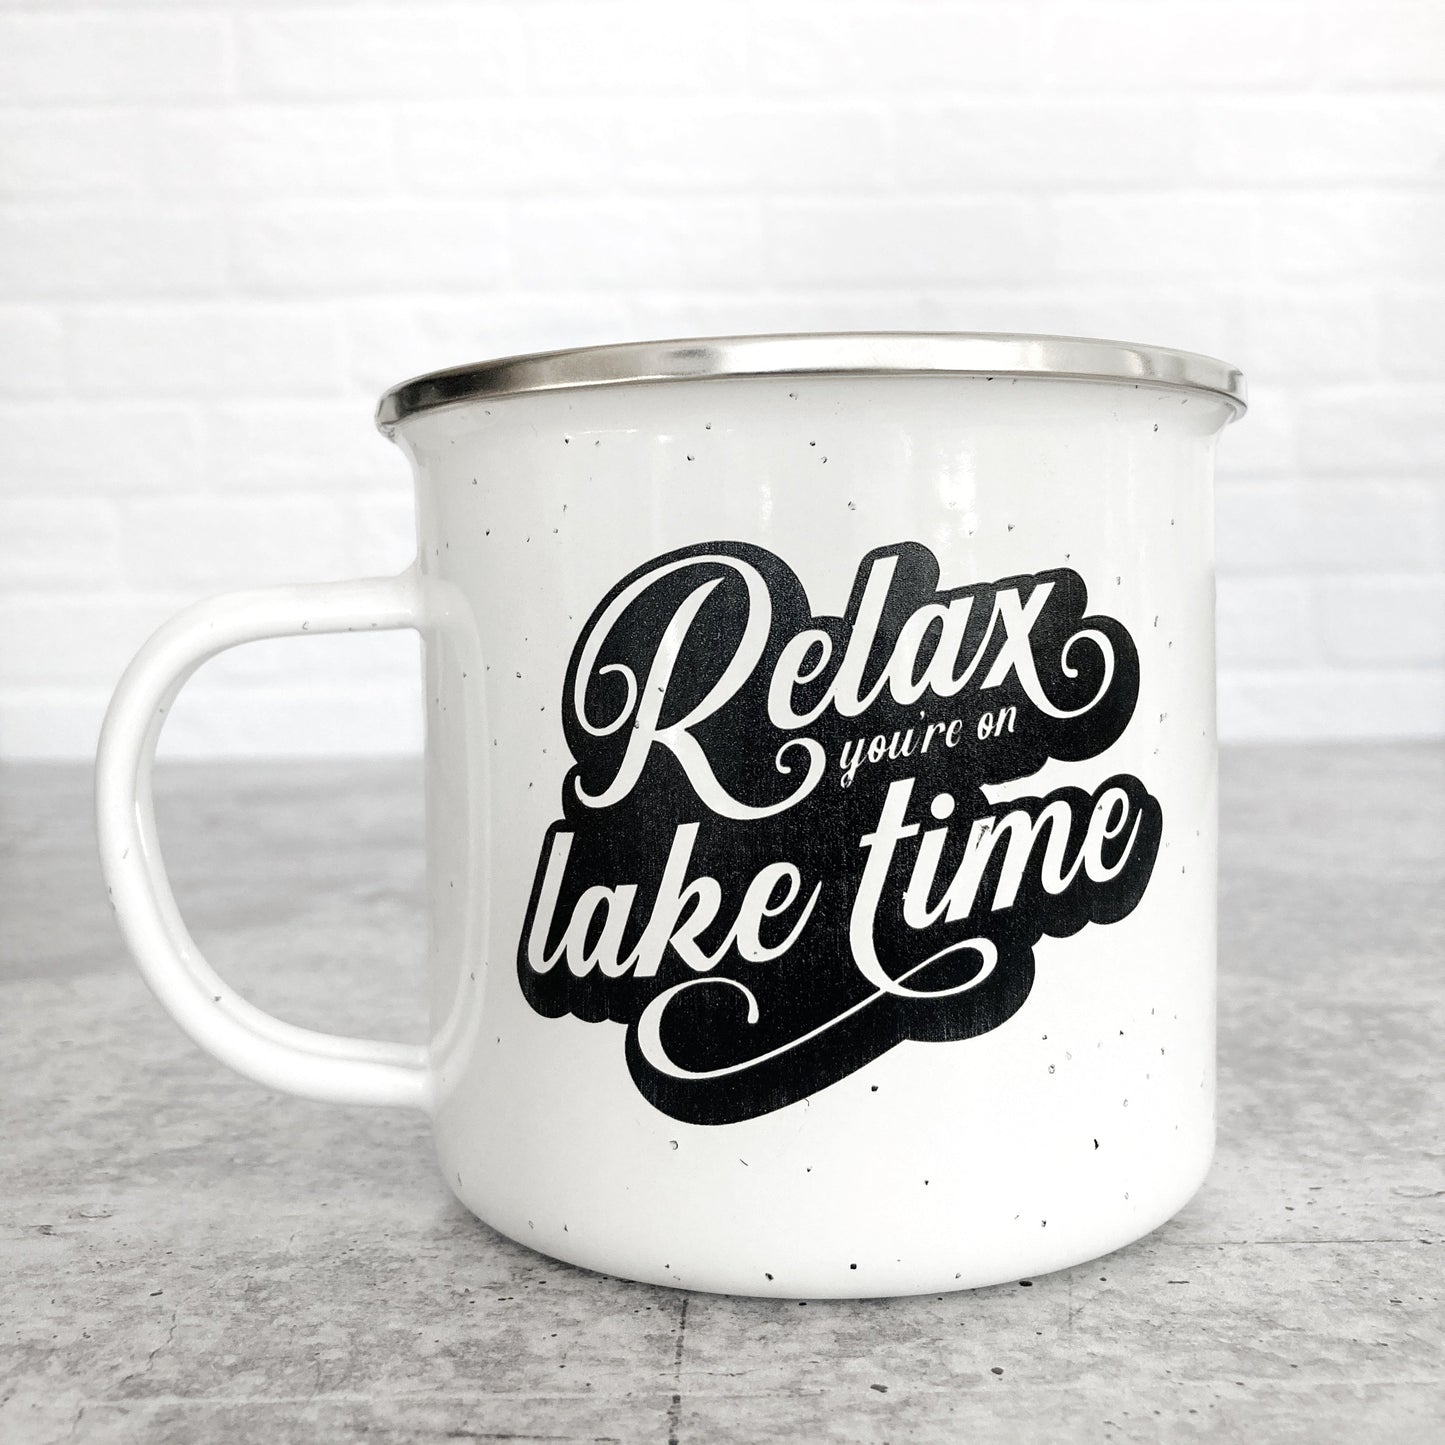 Relax You're on Lake Time Design on a white enamel mug